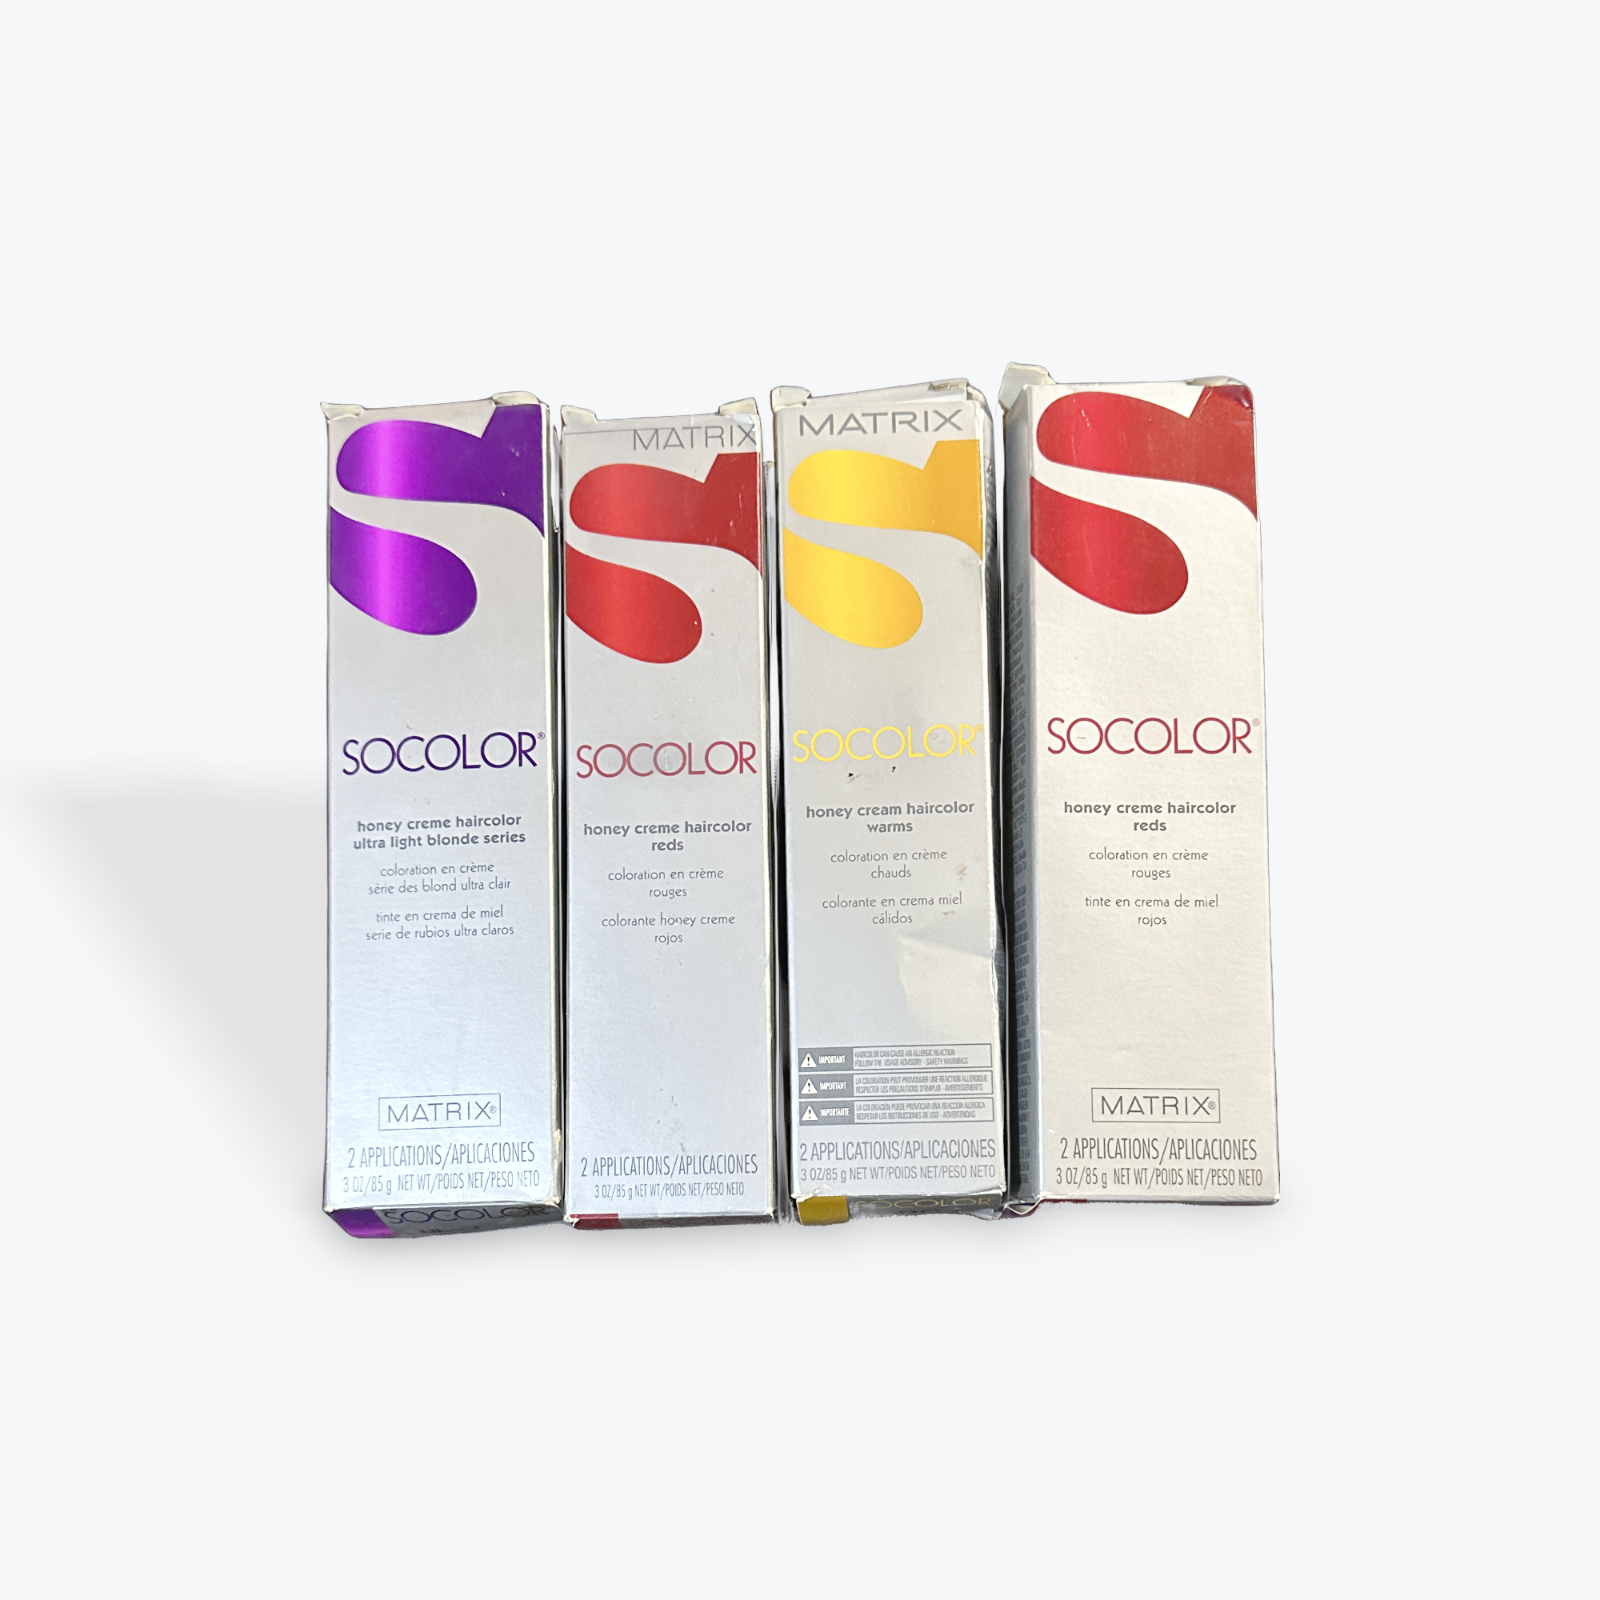 Matrix Socolor Honey Creme Haircolor (choose the color you want) - $9.99